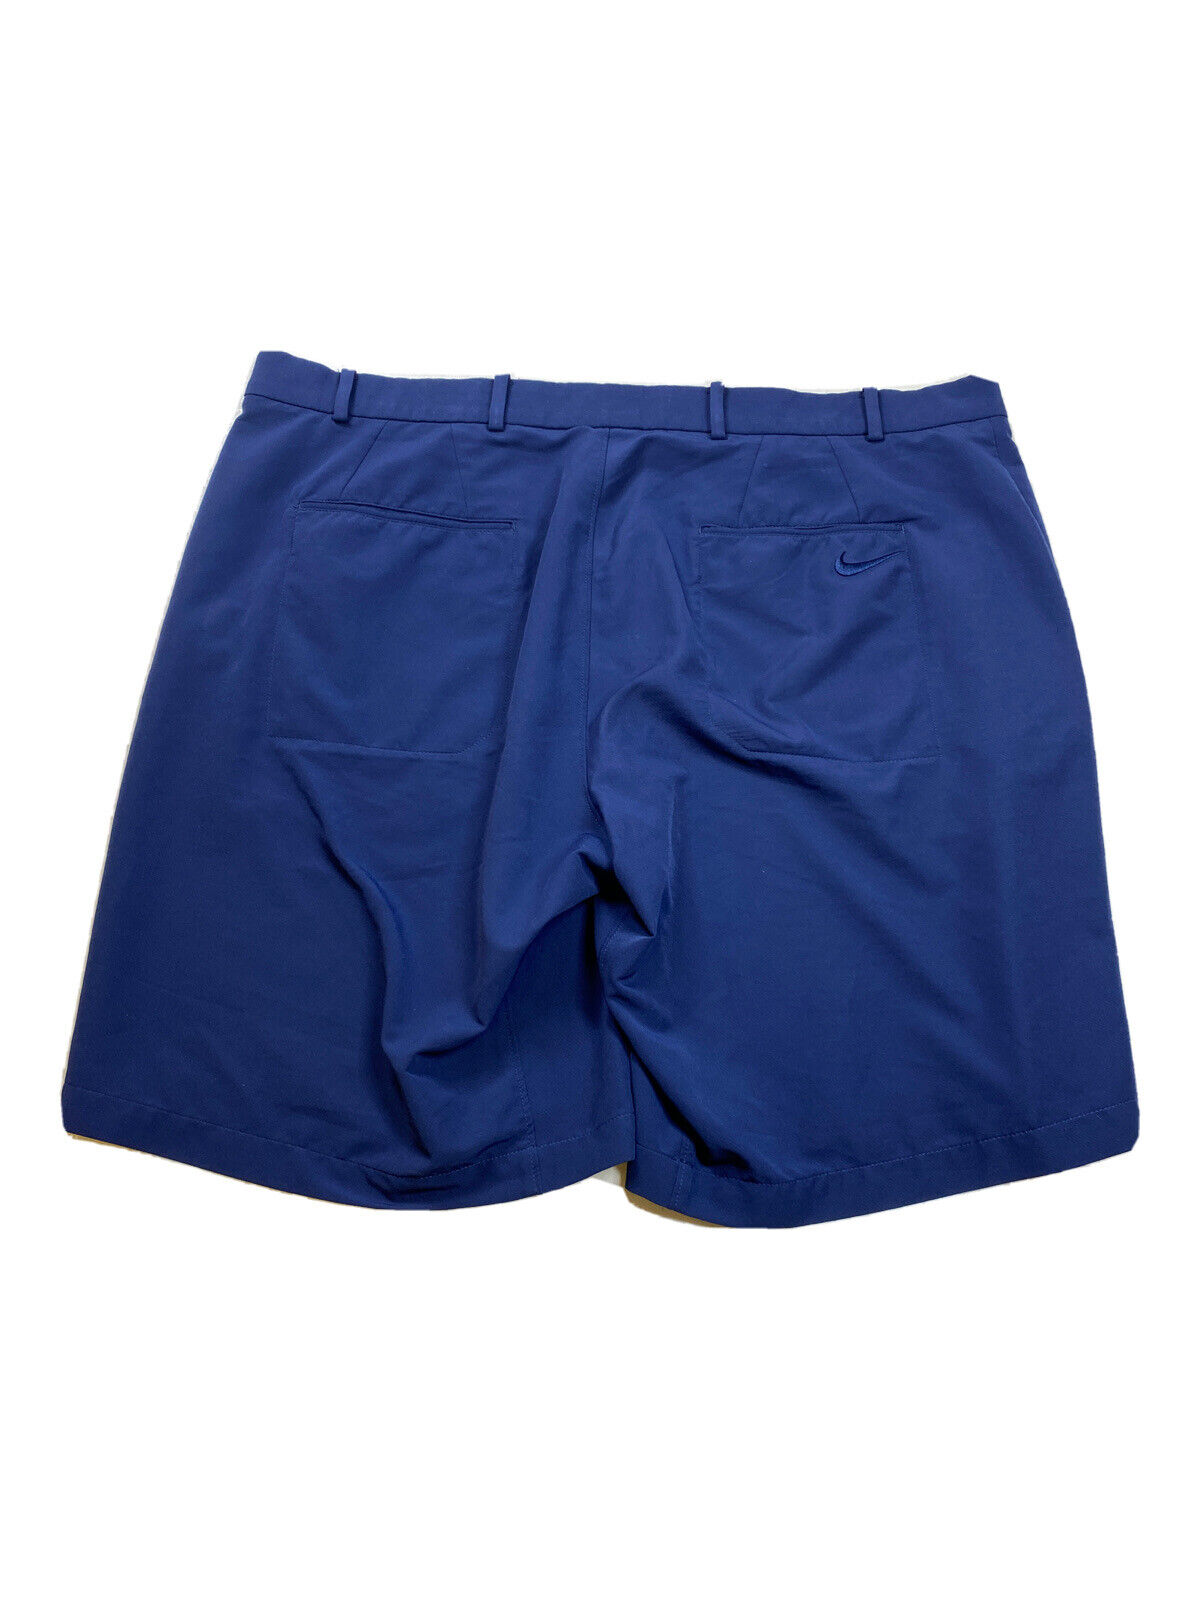 Nike Men's Navy Blue Dri-Fit Polyester Golf Shorts - 40